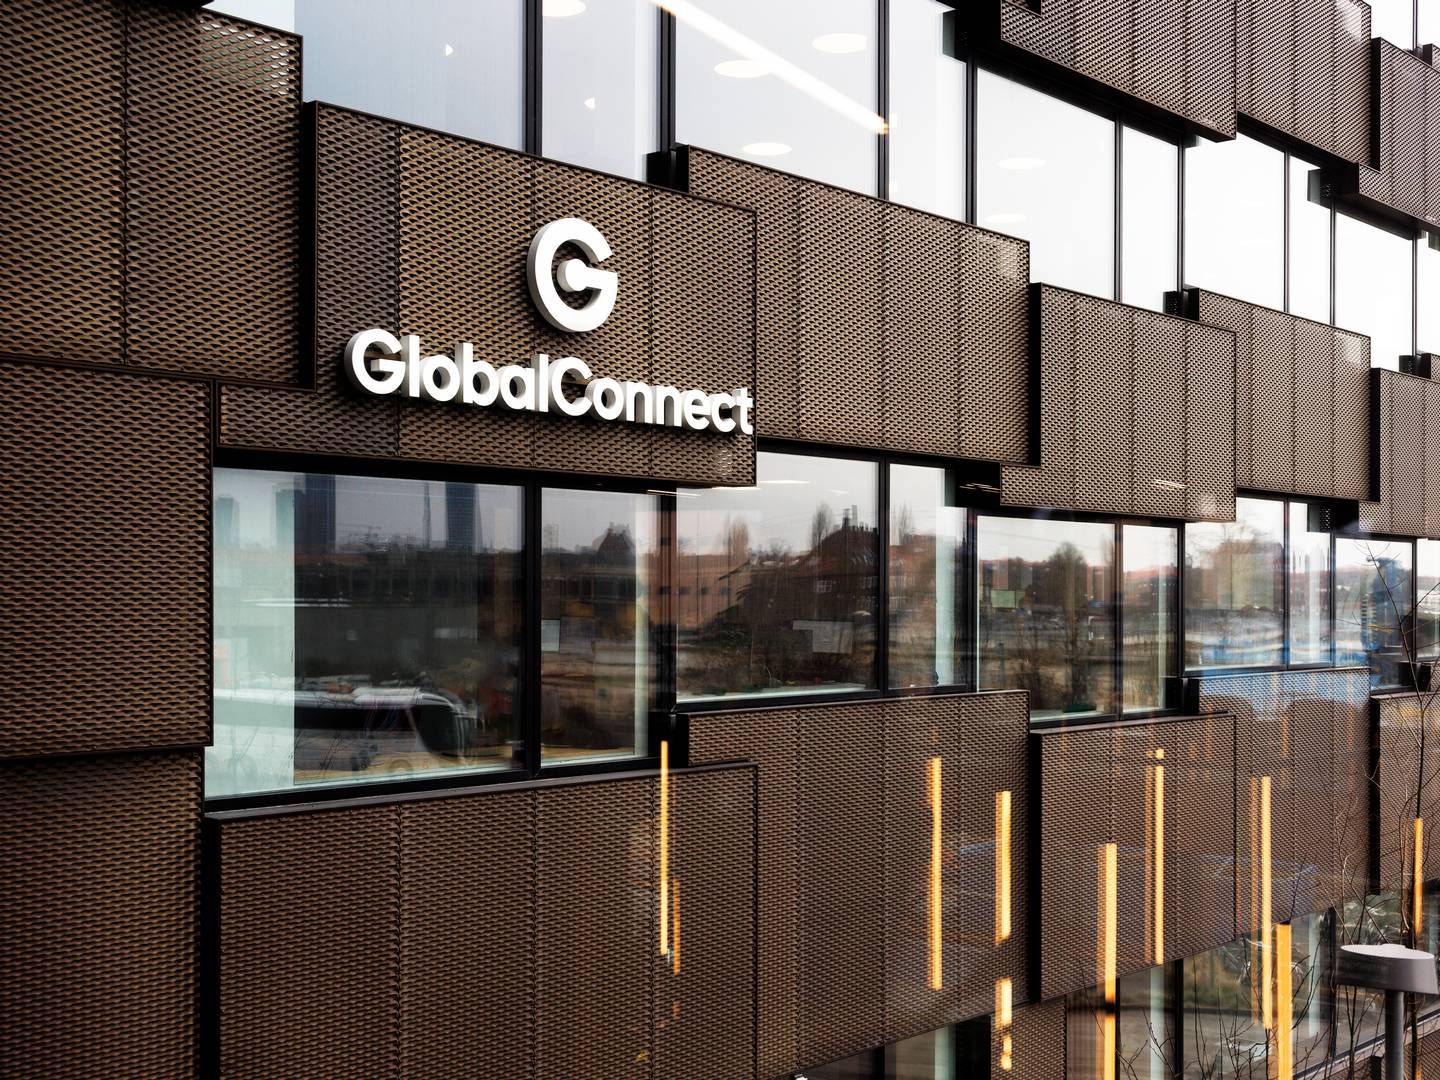 GlobalConnects nye kommunikationsdirektør startede i maj. | Foto: GlobalConnect/PR